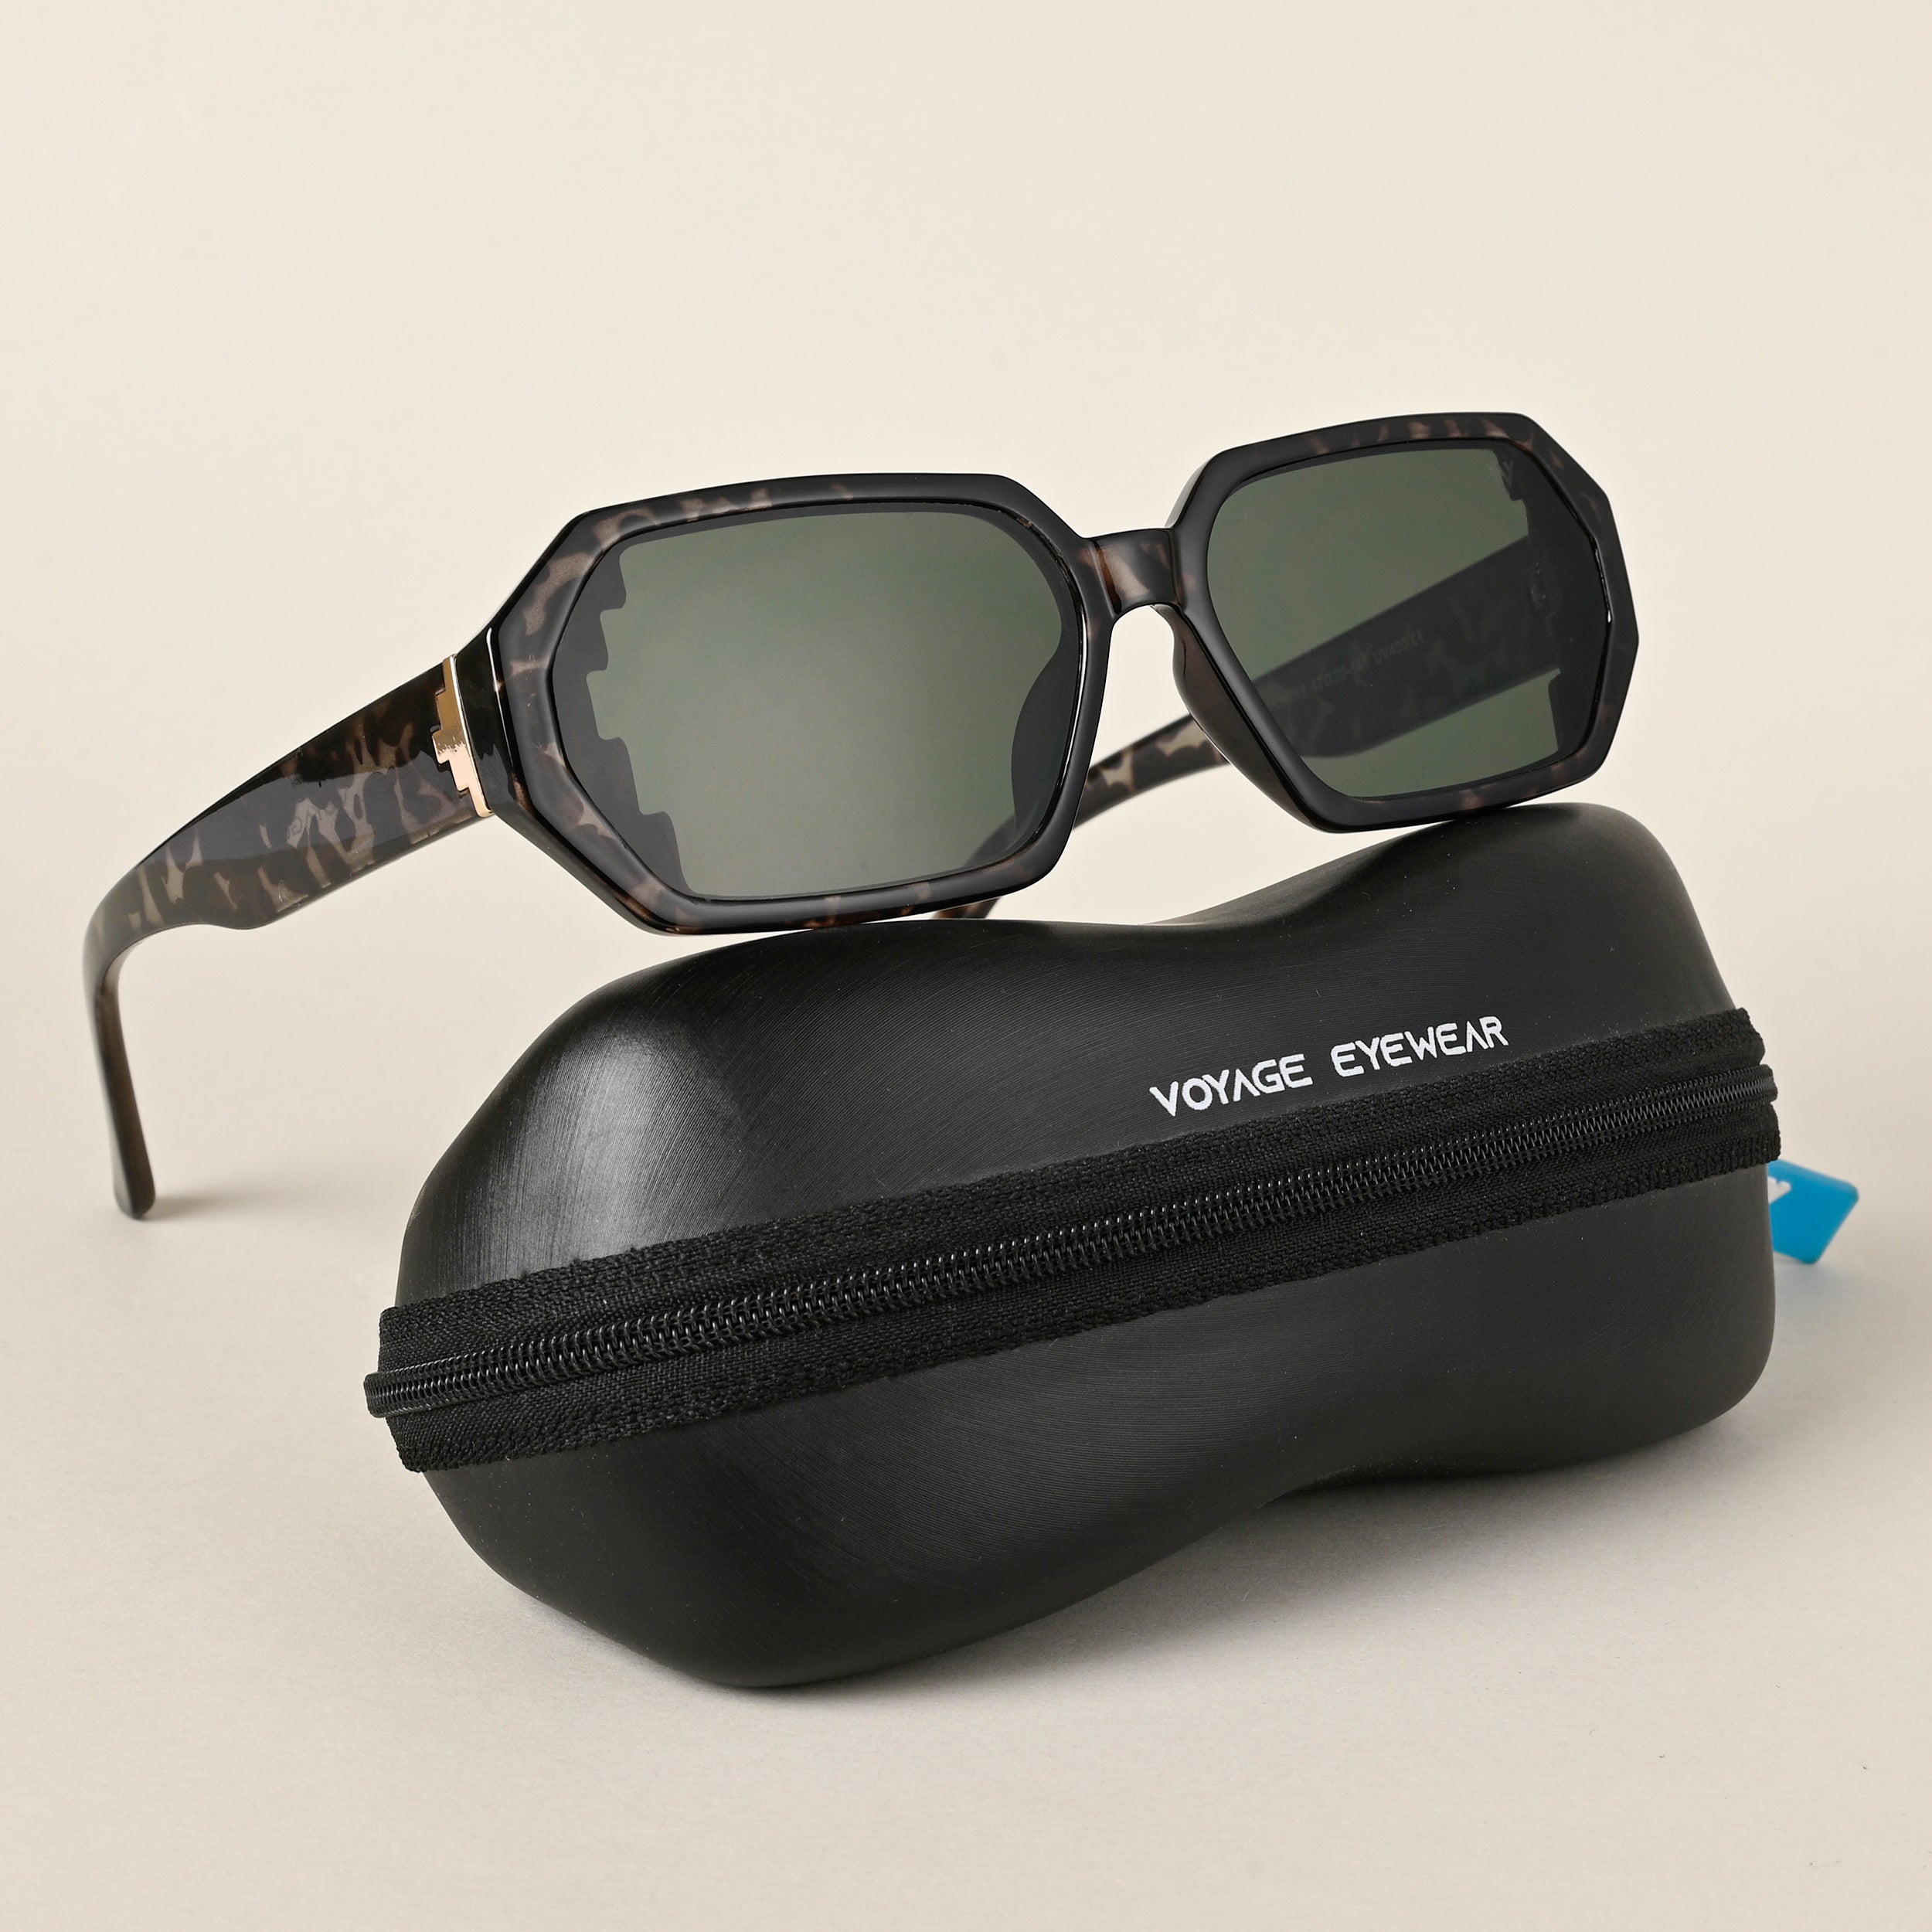 Voyage Sunglasses - Buy Voyage Sunglasses Online in India | Myntra